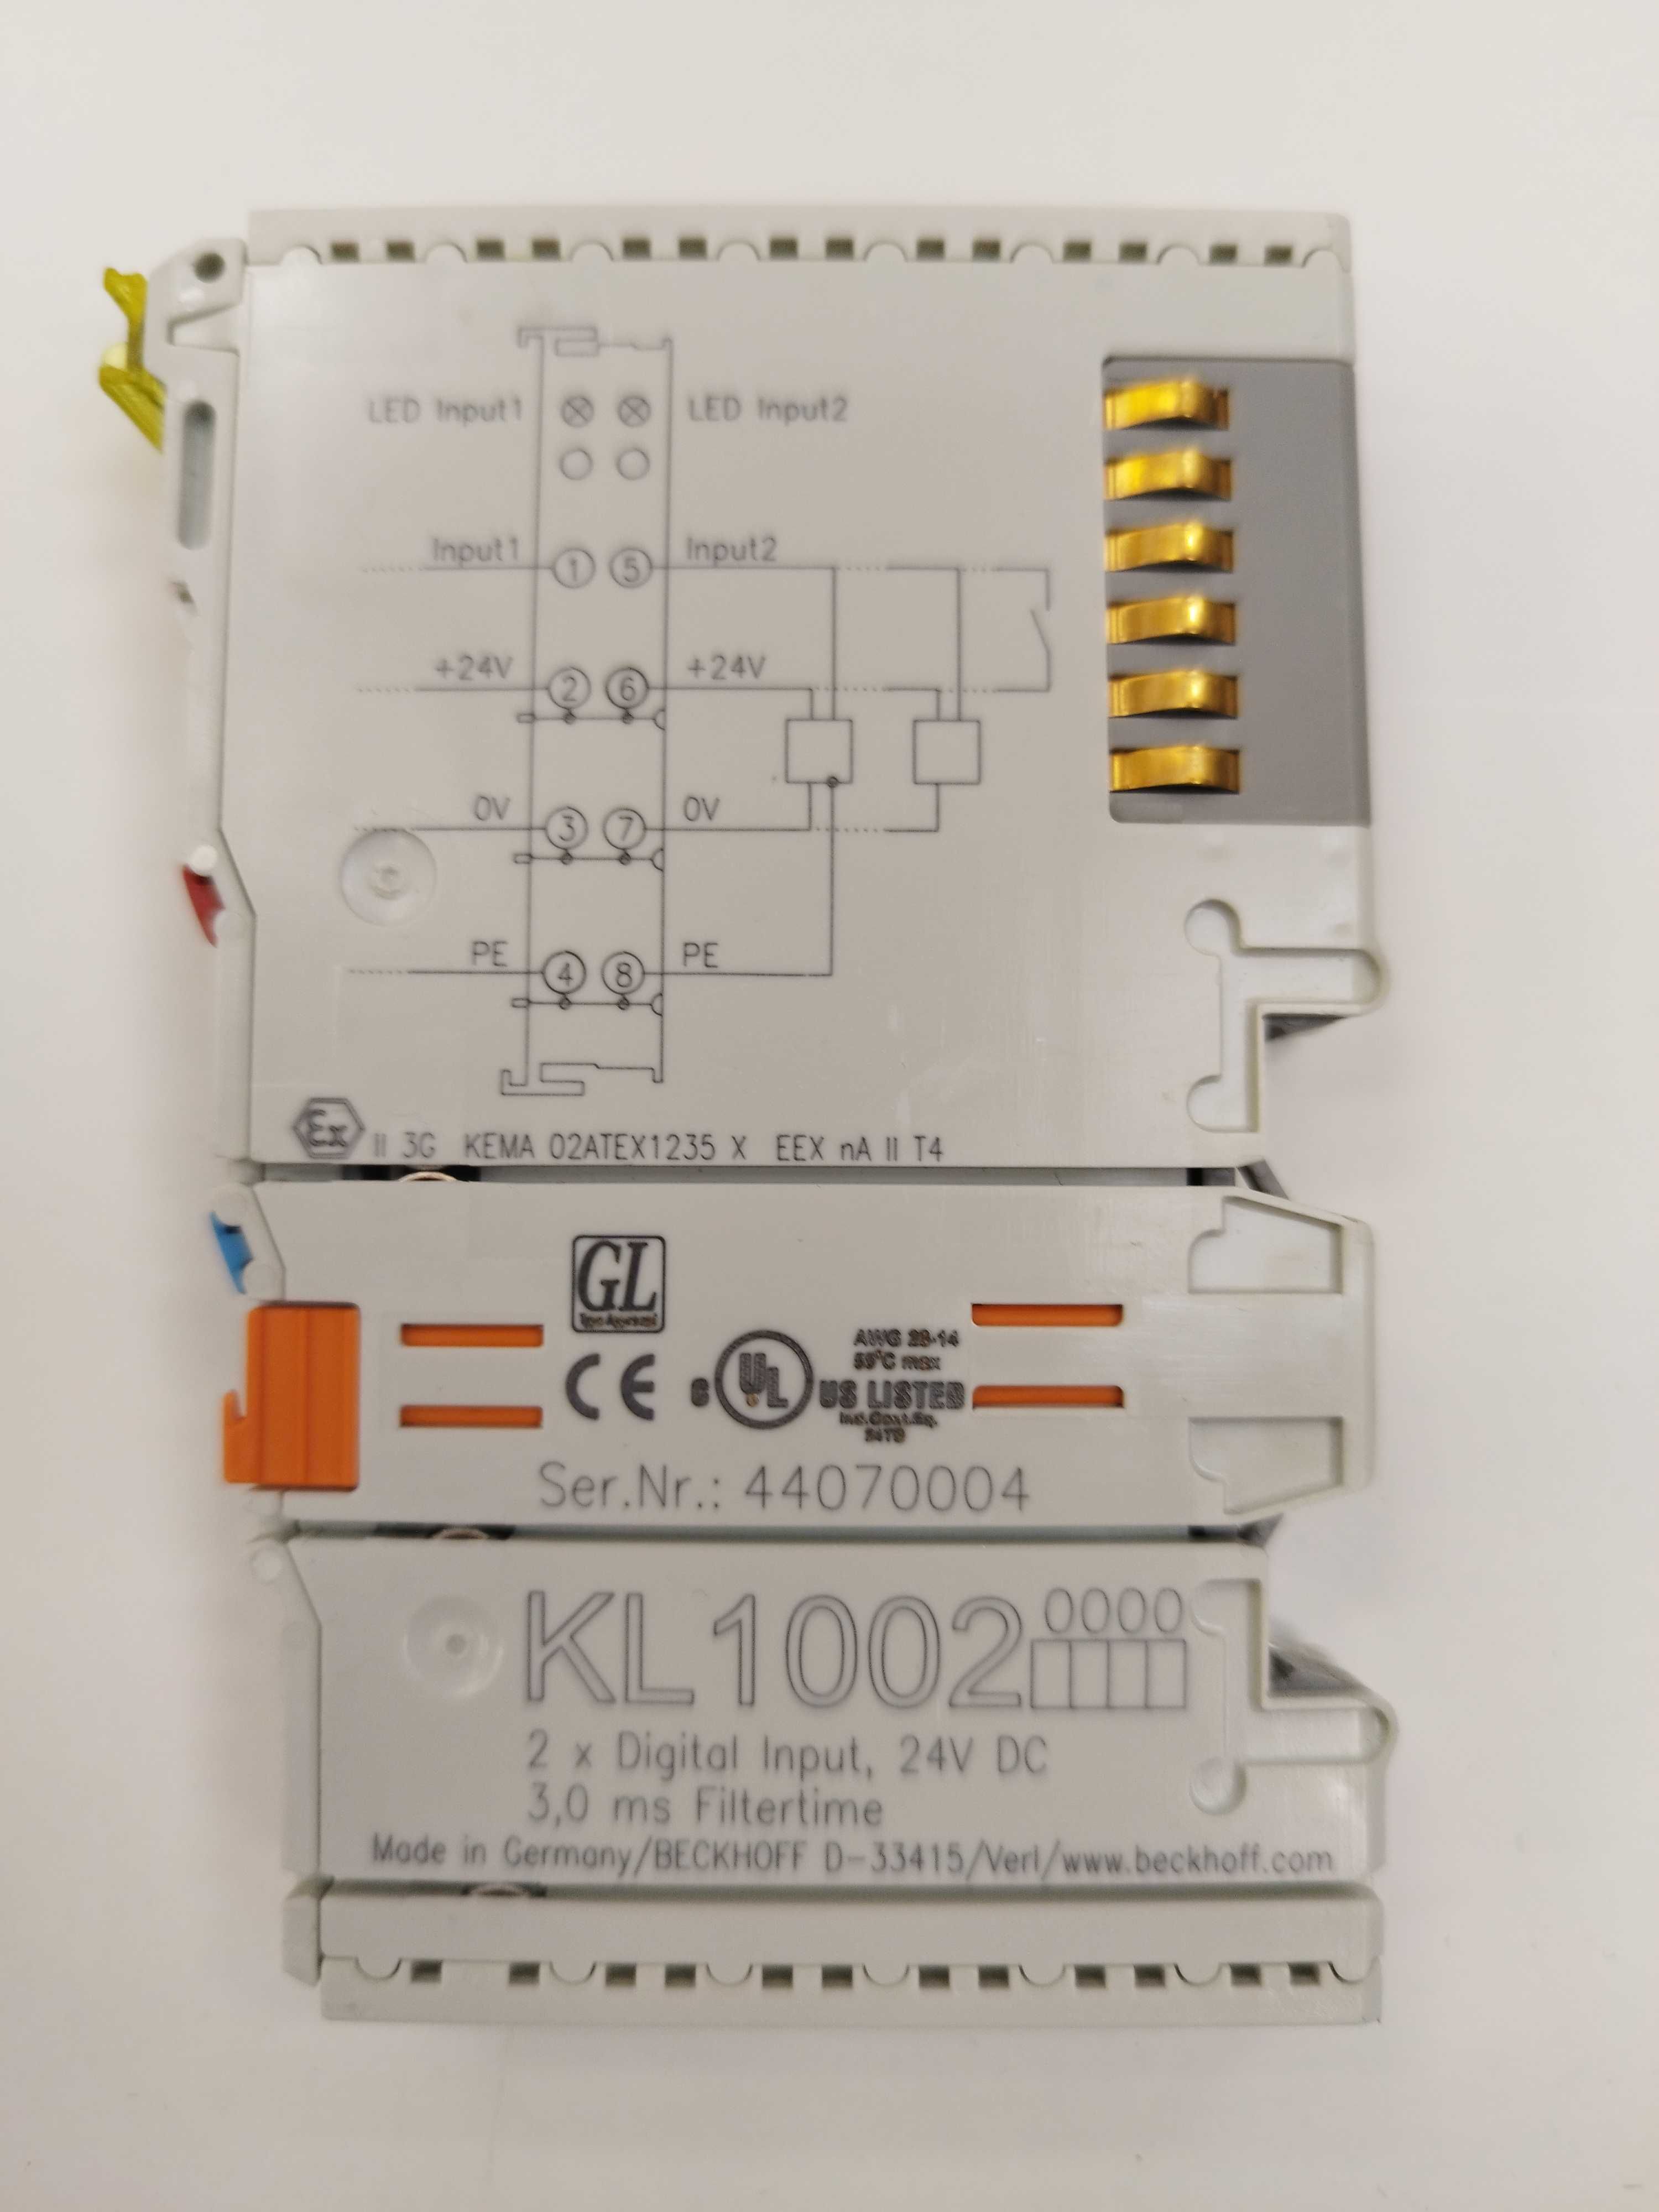 Beckhoff KL1002 moduł wejść - 2 x Di z filtrem 3ms